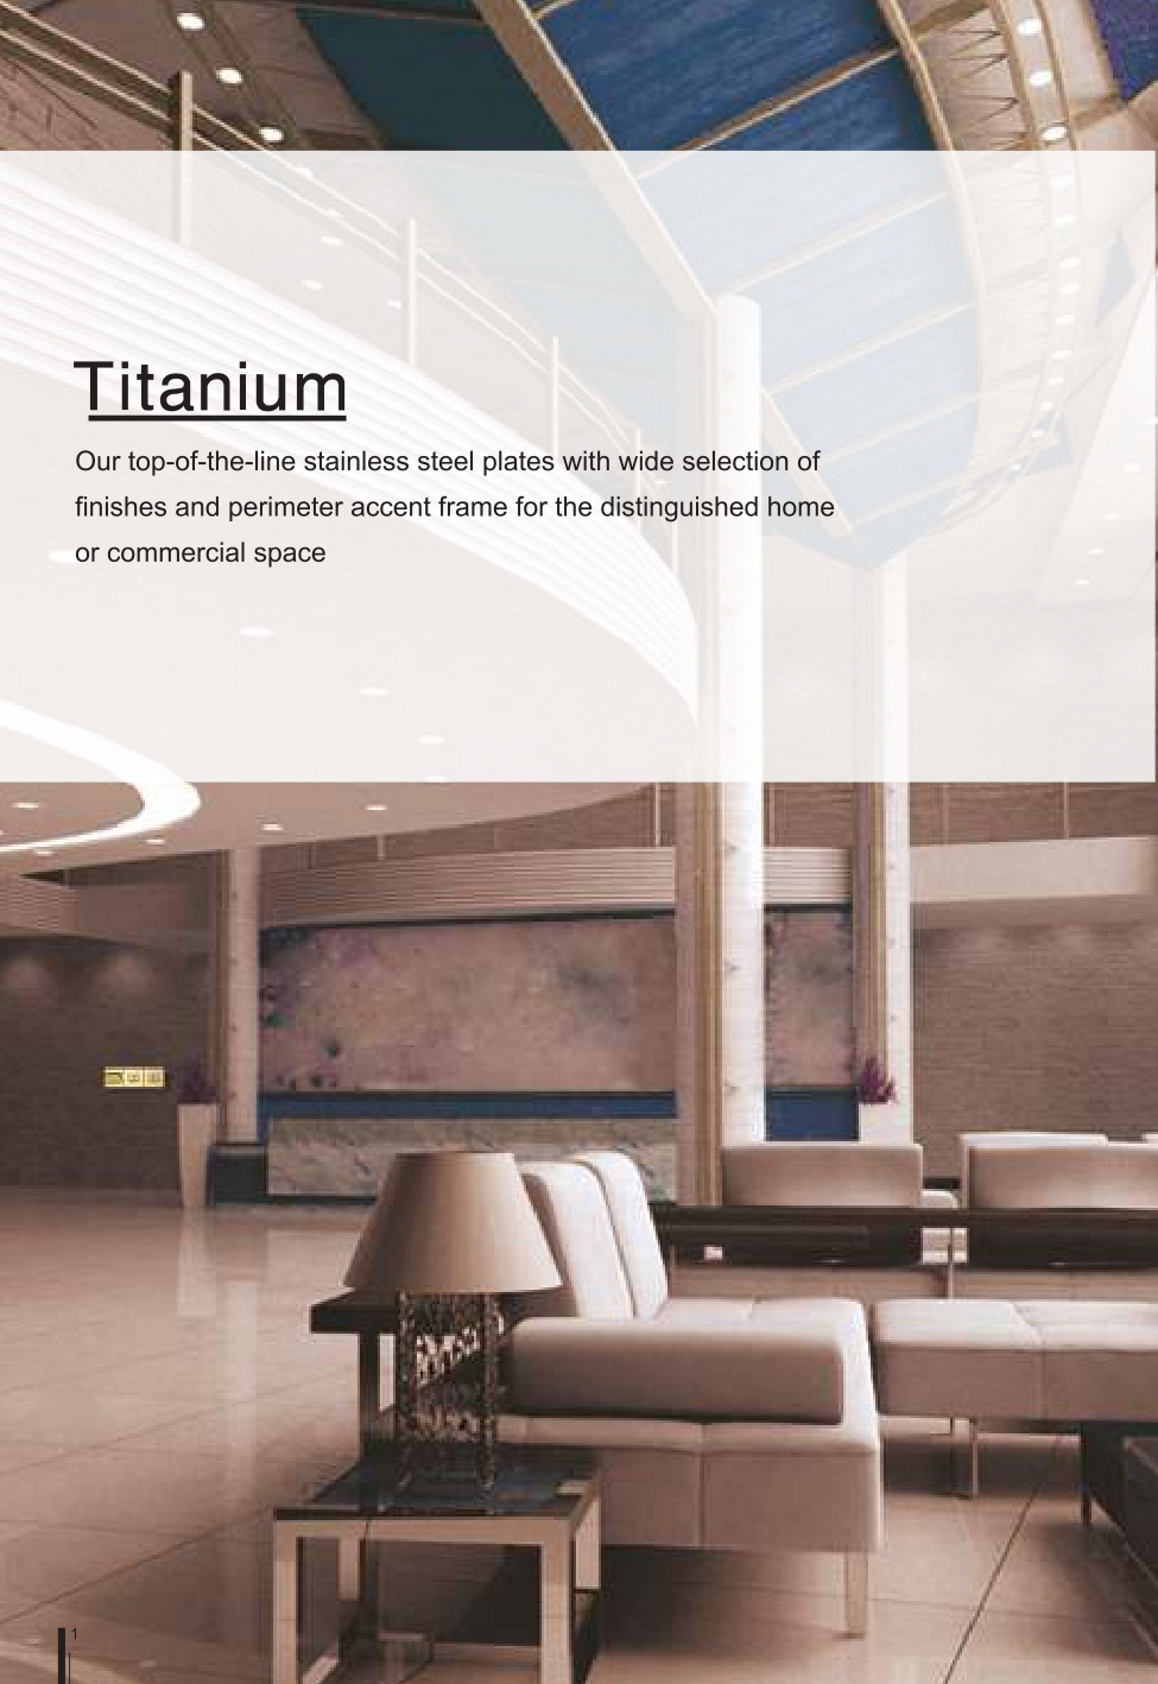 Titanium brochure.jpg